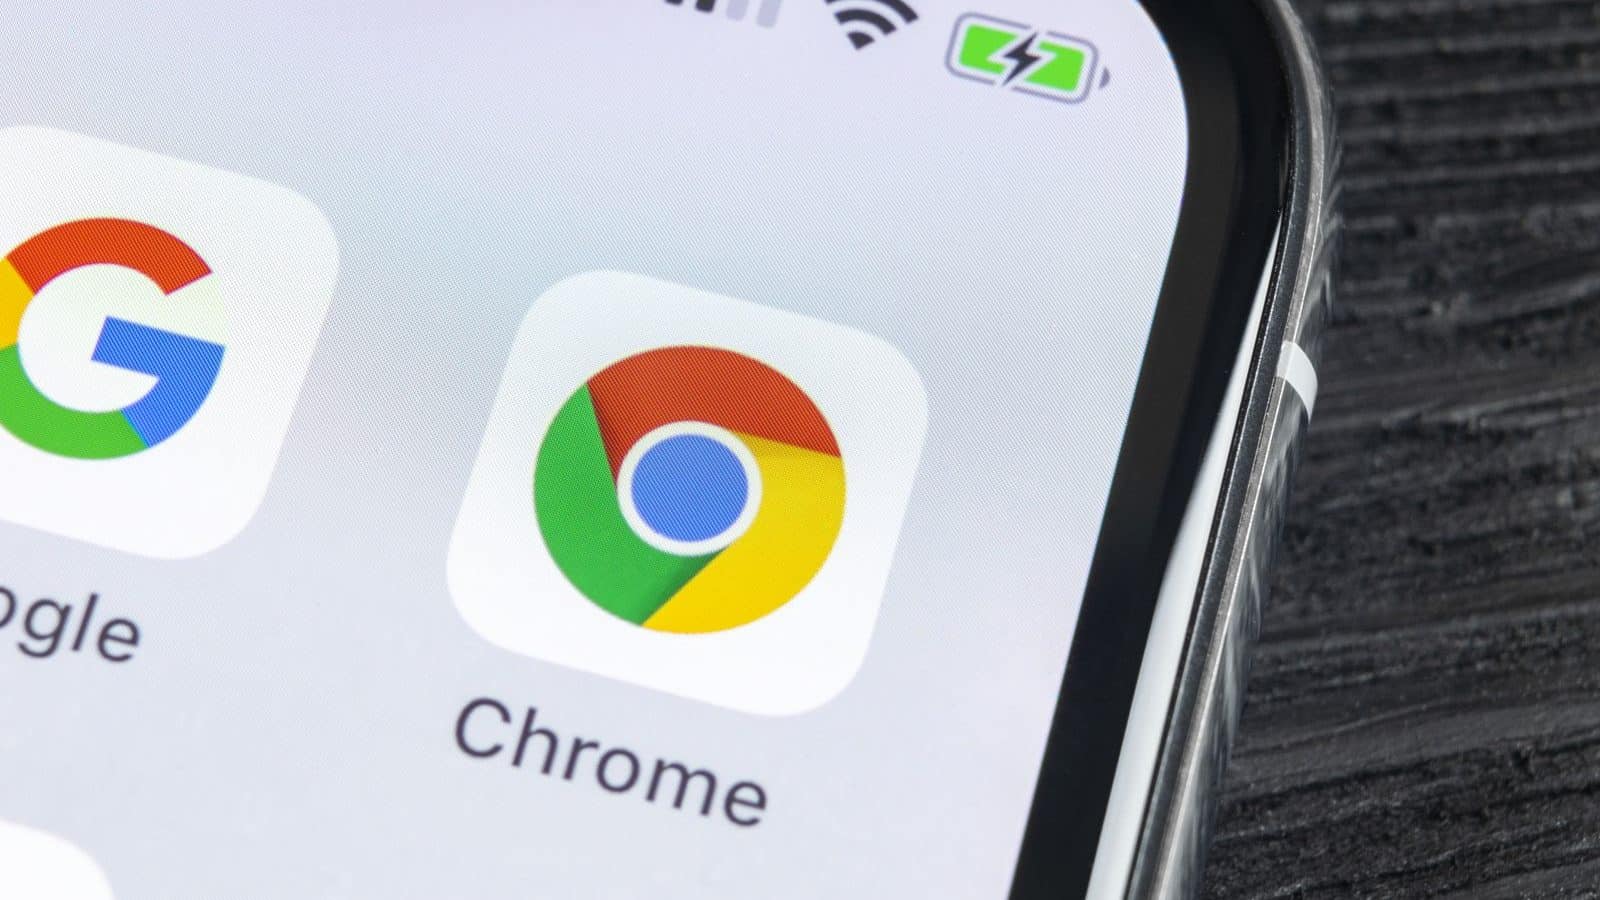  Google Chrome: అత్యంత శక్తివంతమైన మరియు బహుముఖ బ్రౌజర్ - దాని 4 ప్రధాన ప్రయోజనాలను తెలుసుకోండి